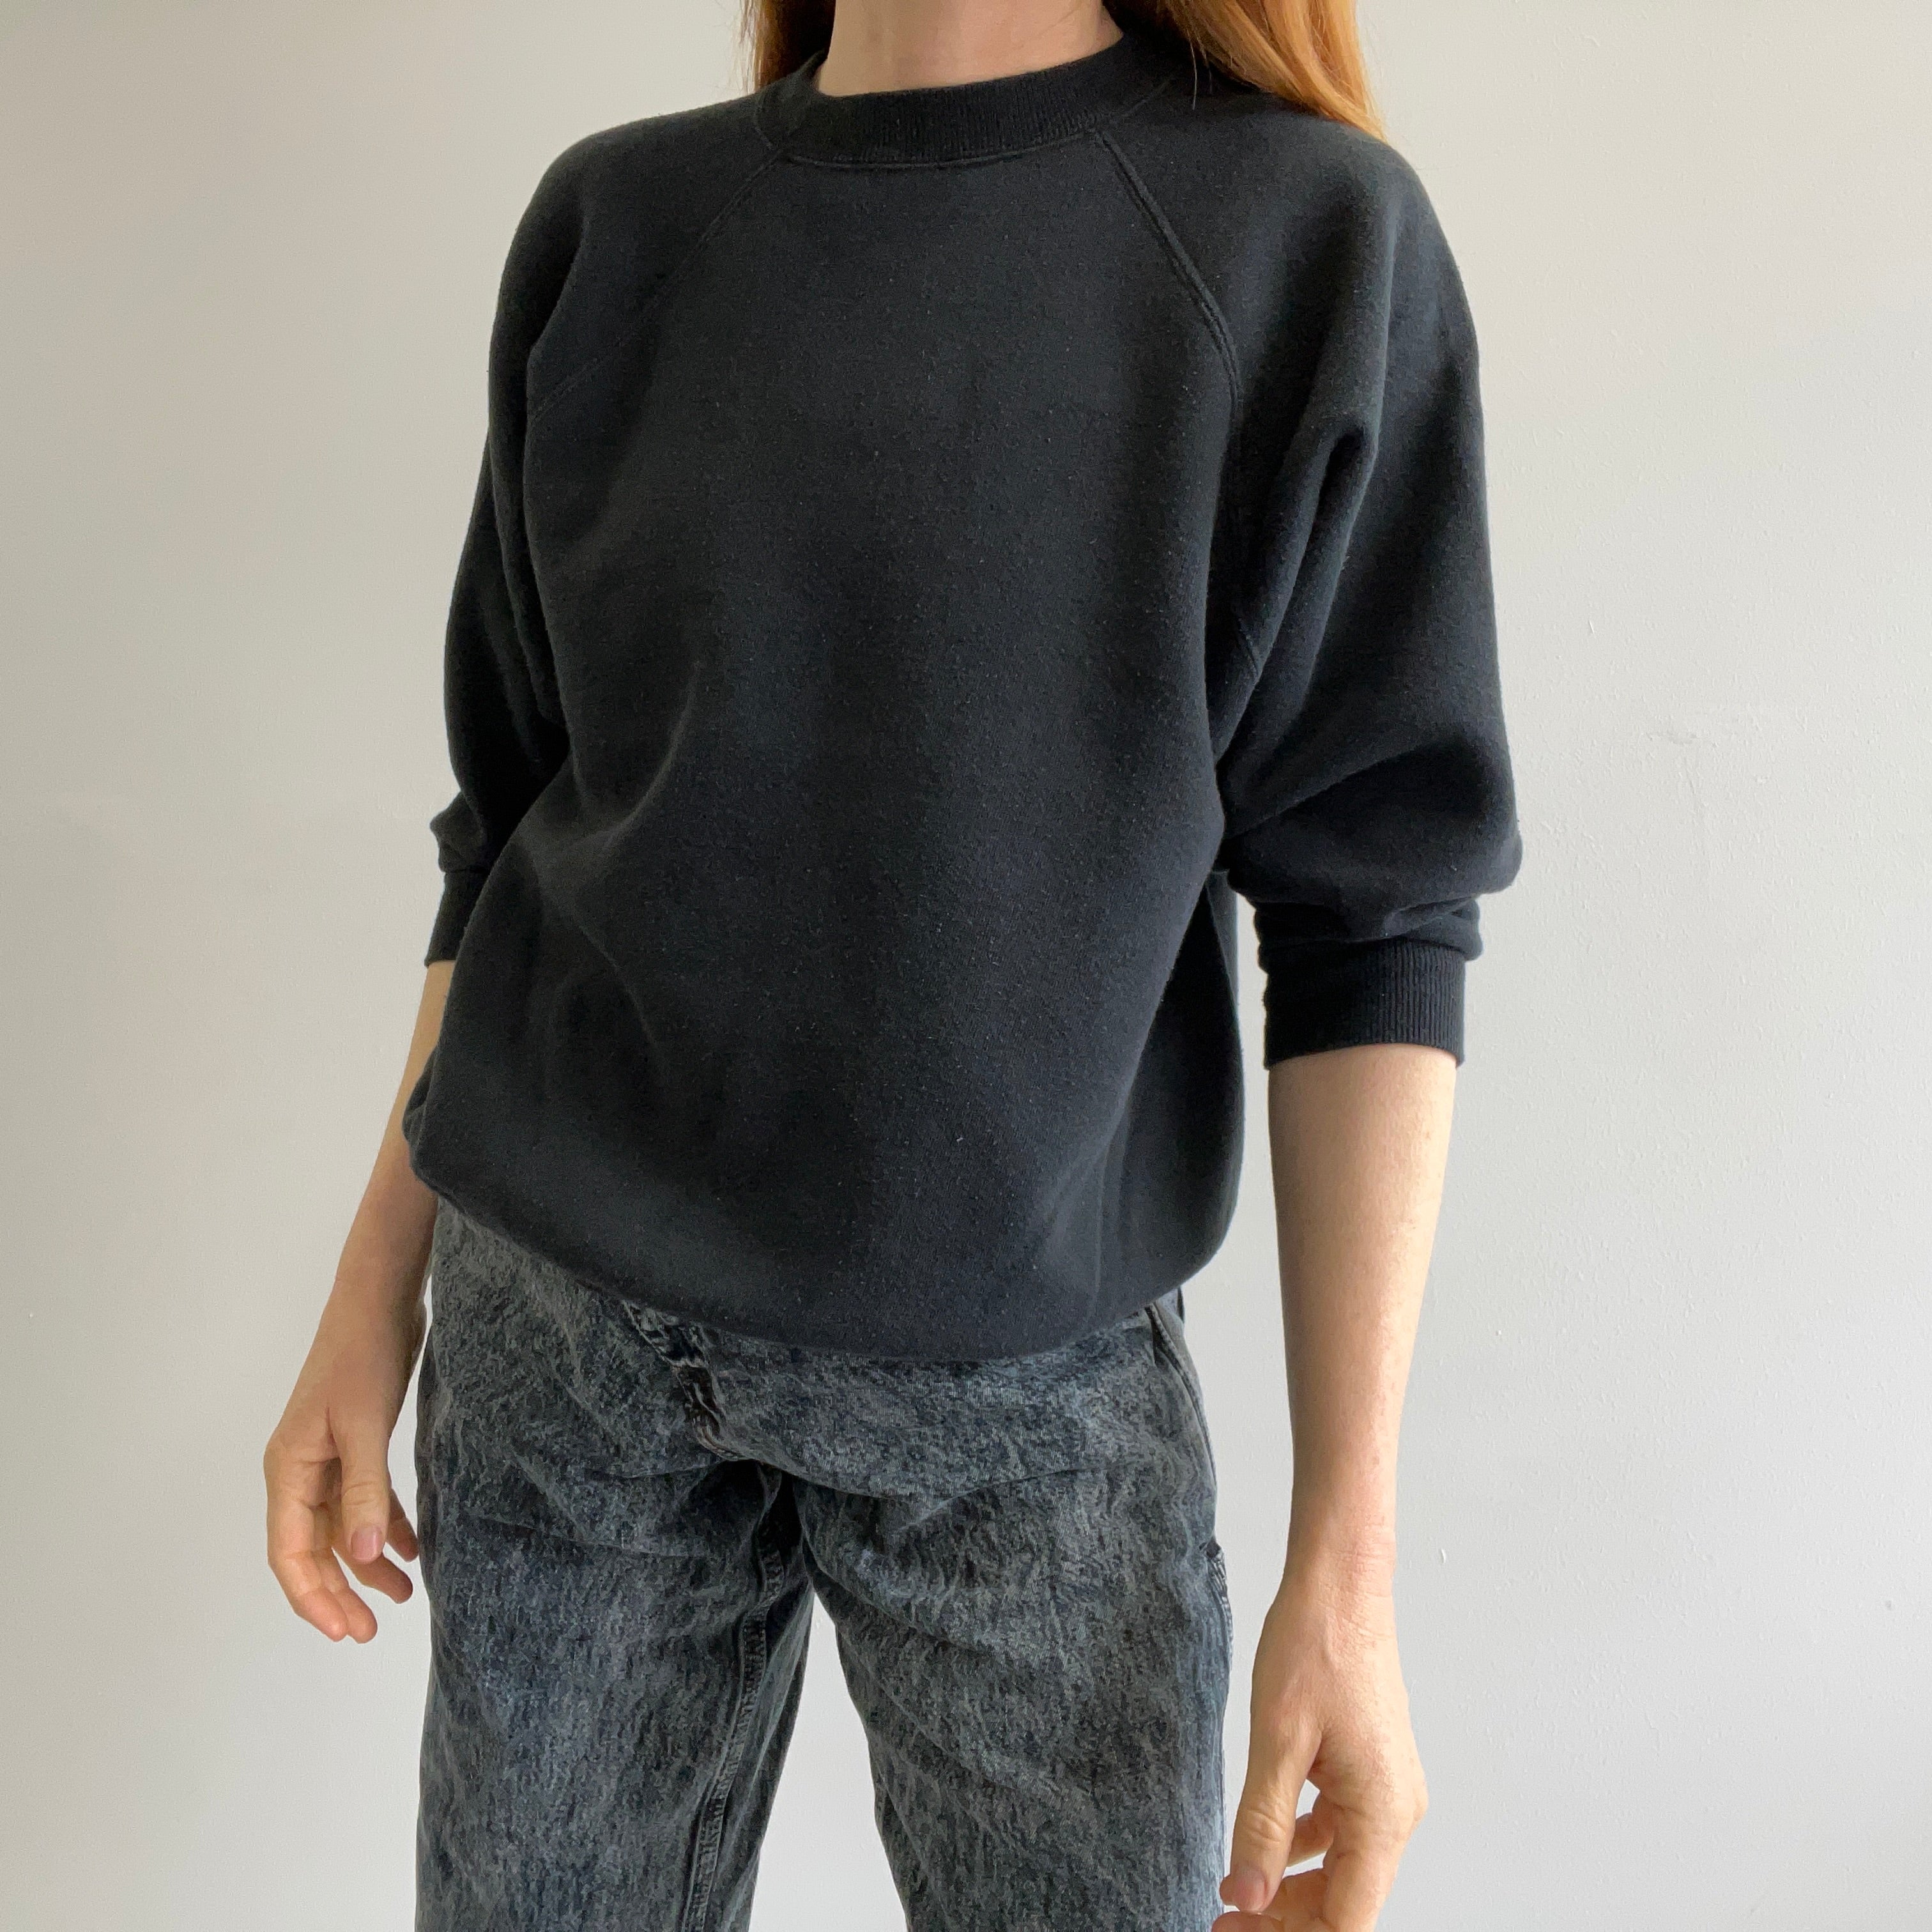 1980s Faded Blank Black Sweatshirt with 3/4 Sleeves